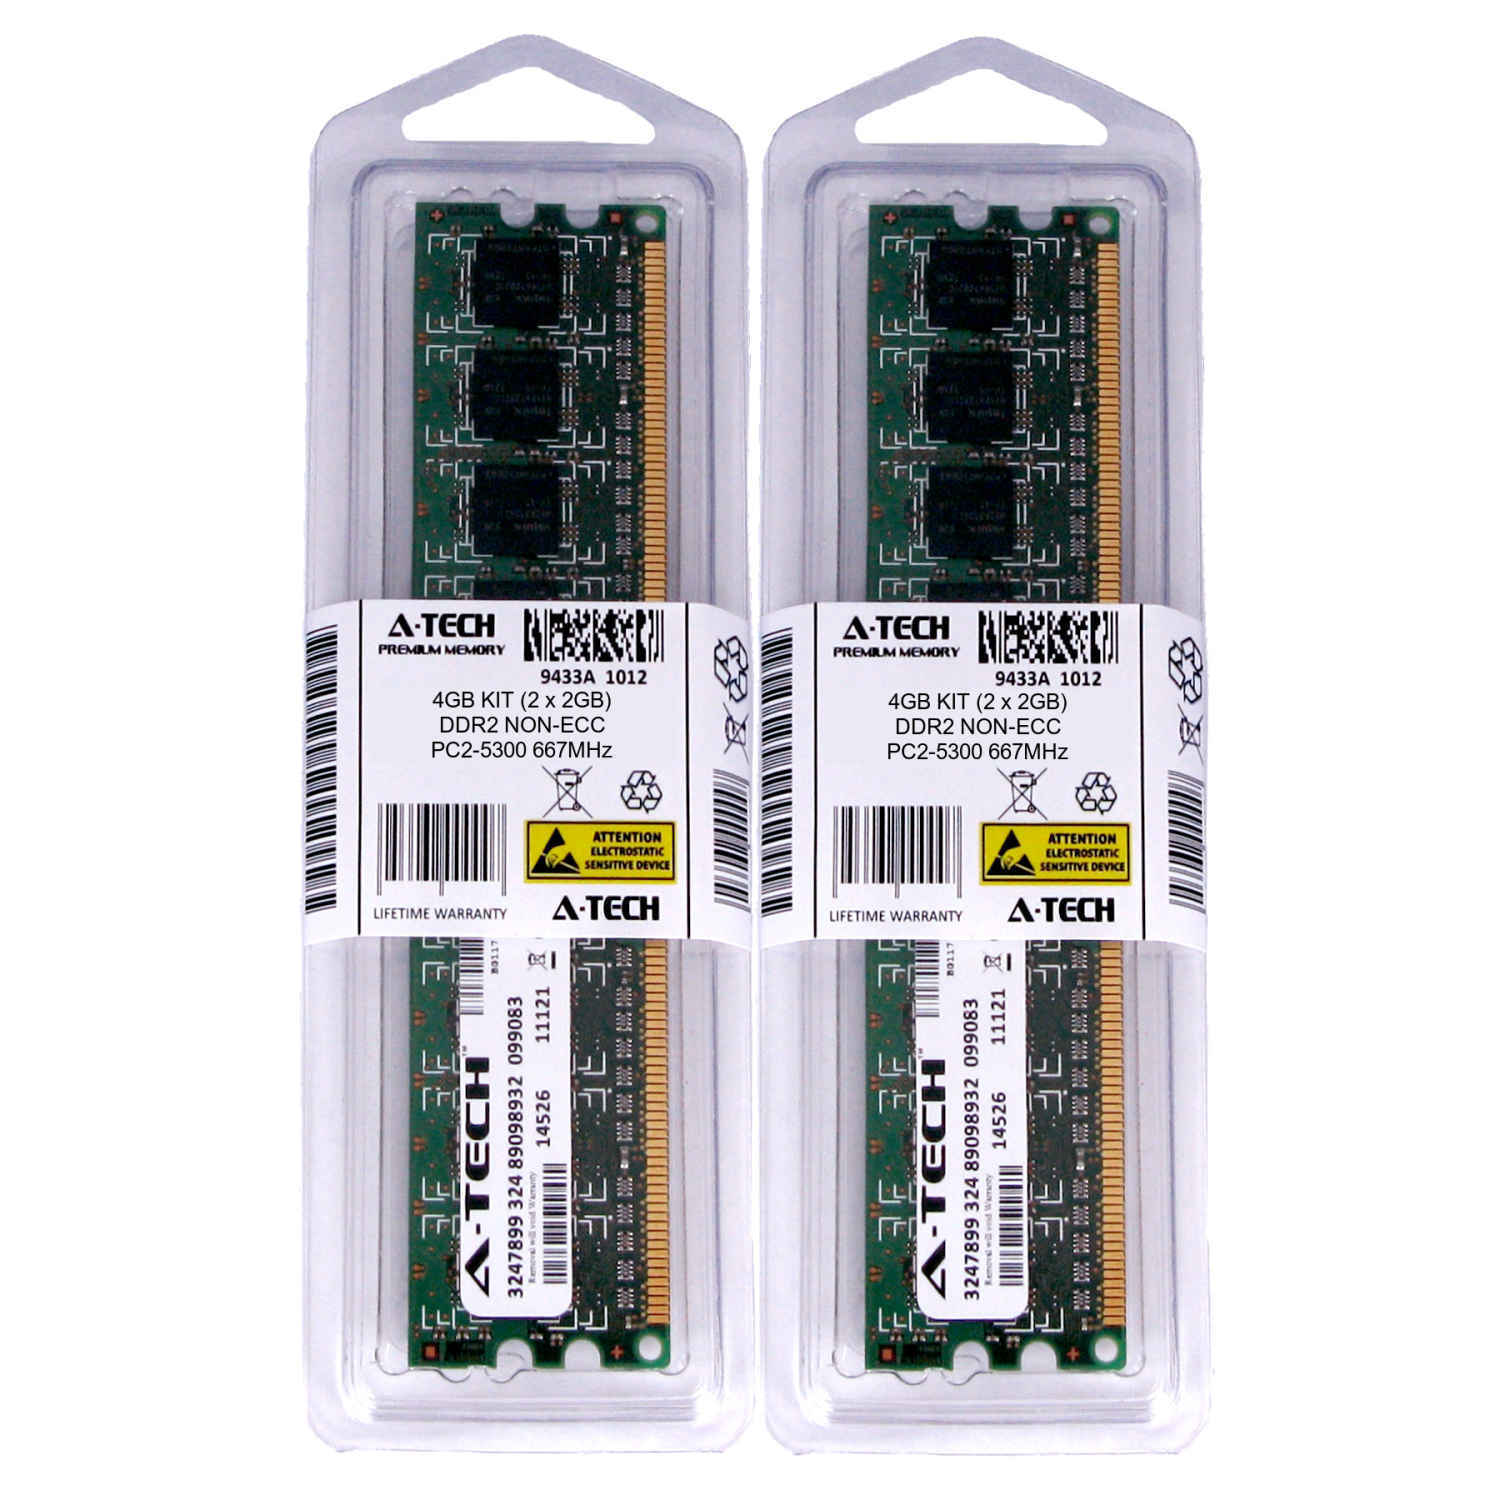 4GB KIT 2 x 2GB DIMM DDR2 NON-ECC PC2-5300 667MHz 667 MHz DDR-2 DDR 2 Ram Memory